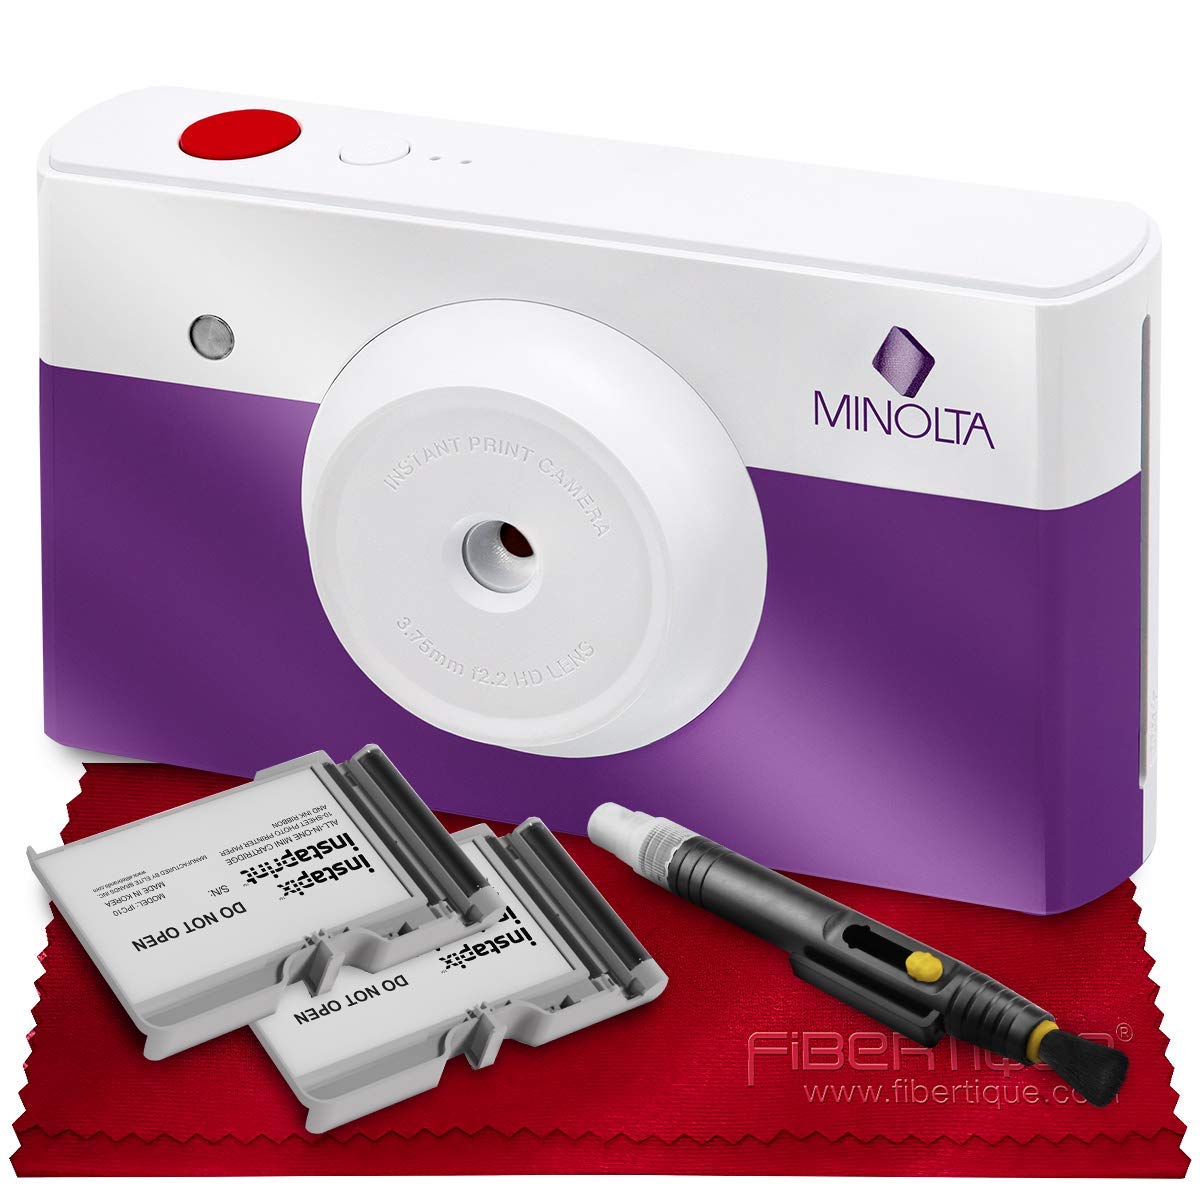 Picture of Minolta MINOLTA-MNCP10-PP-B-KIT3288-NFBA Instapix Print Digital Camera with Printer&#44; Purple